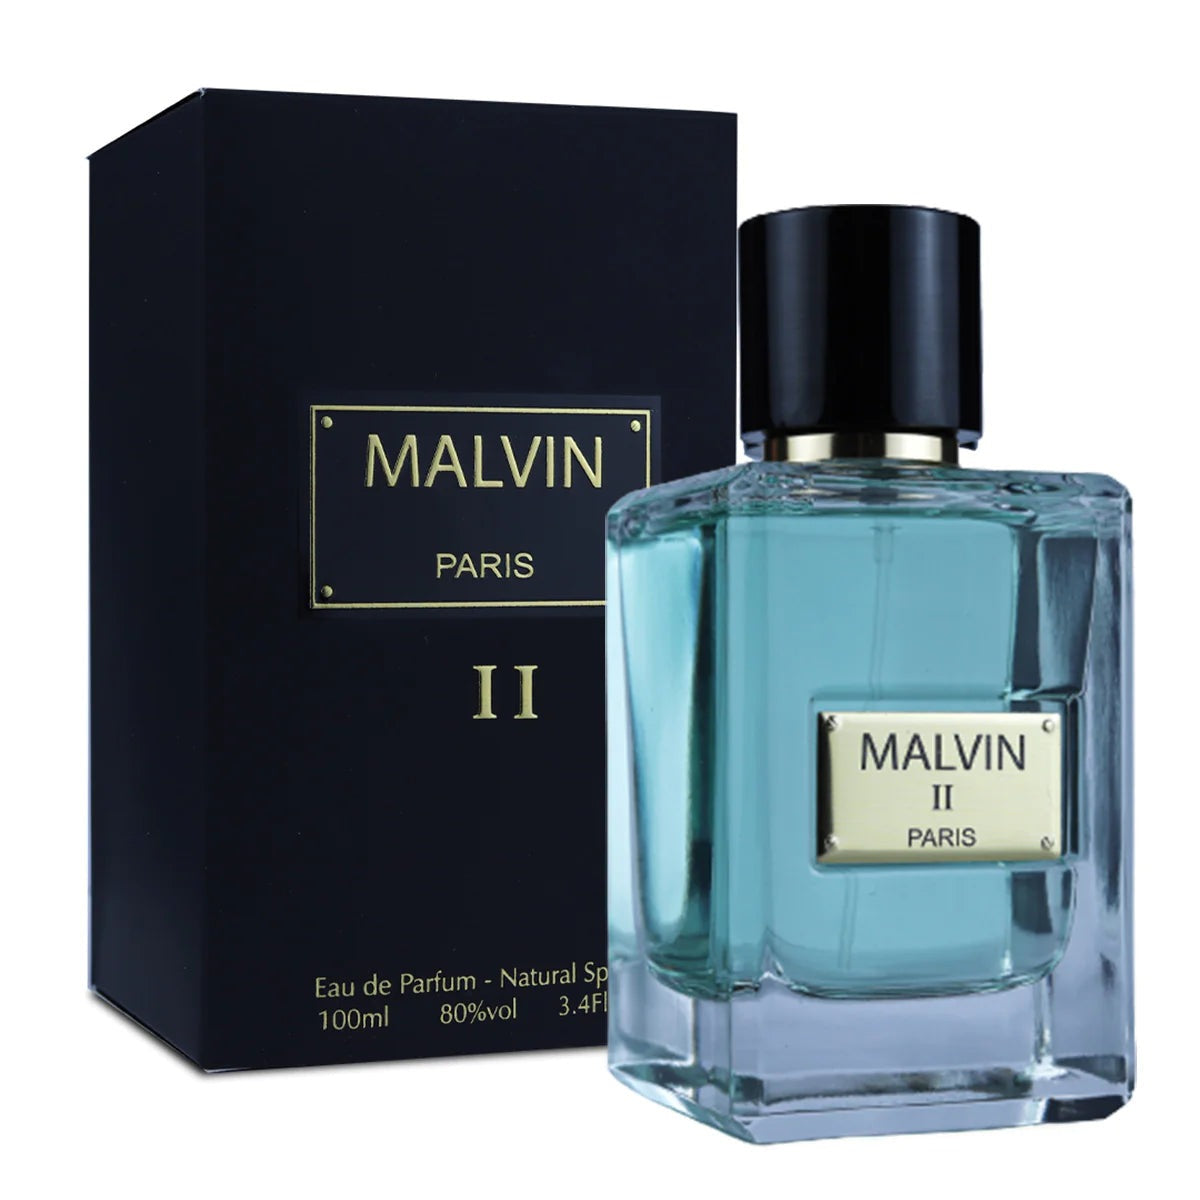 Malvin II